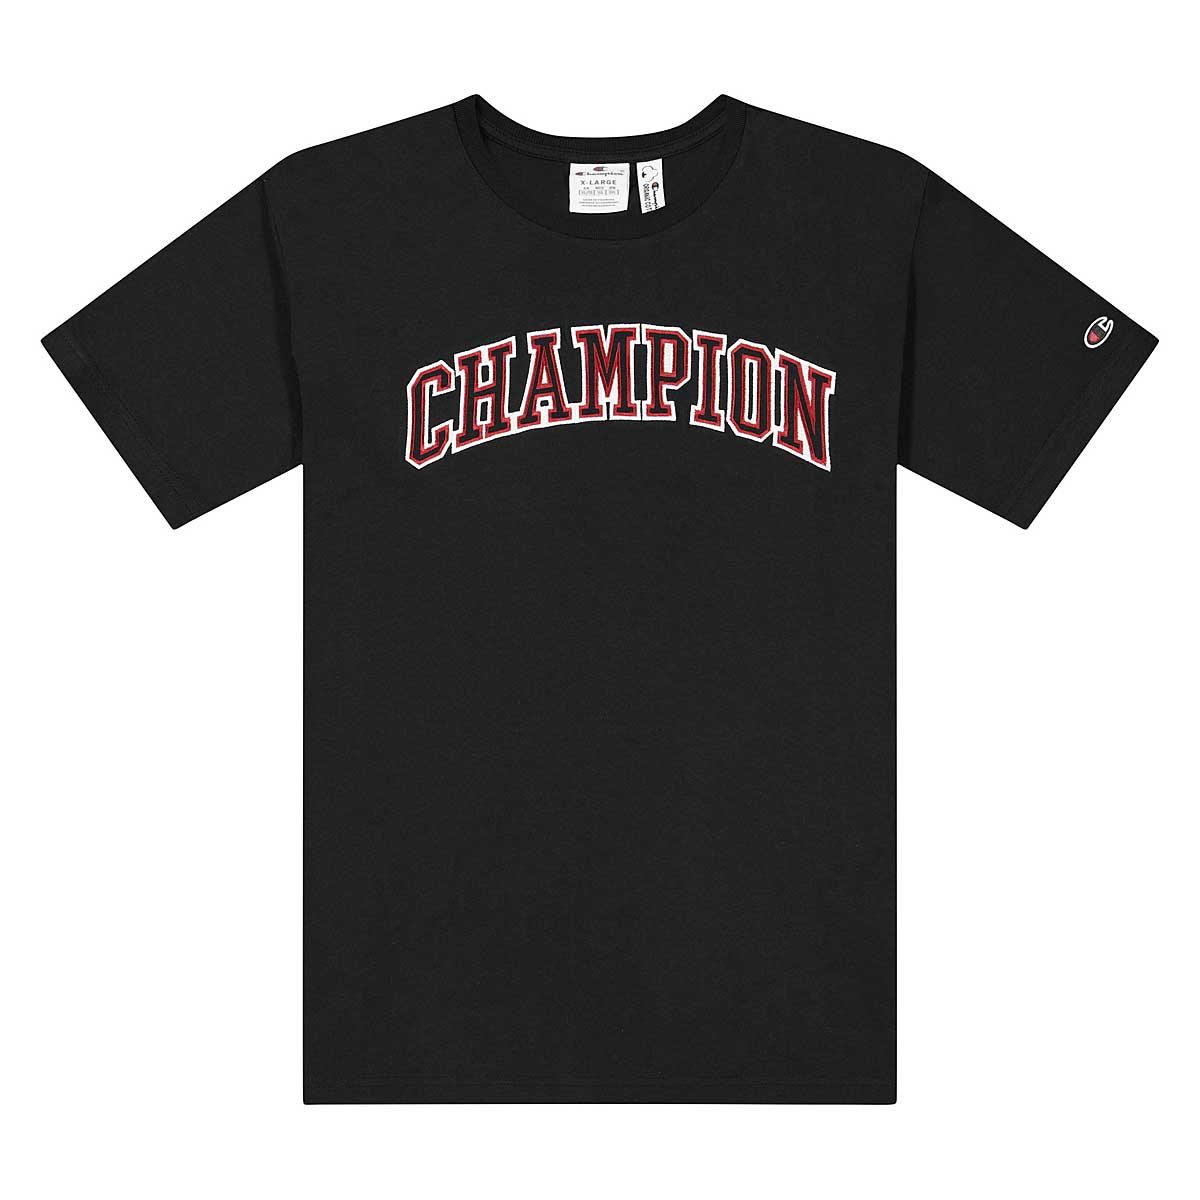 Champion Rochester T-Shirt, Black Beauty/Black Beauty